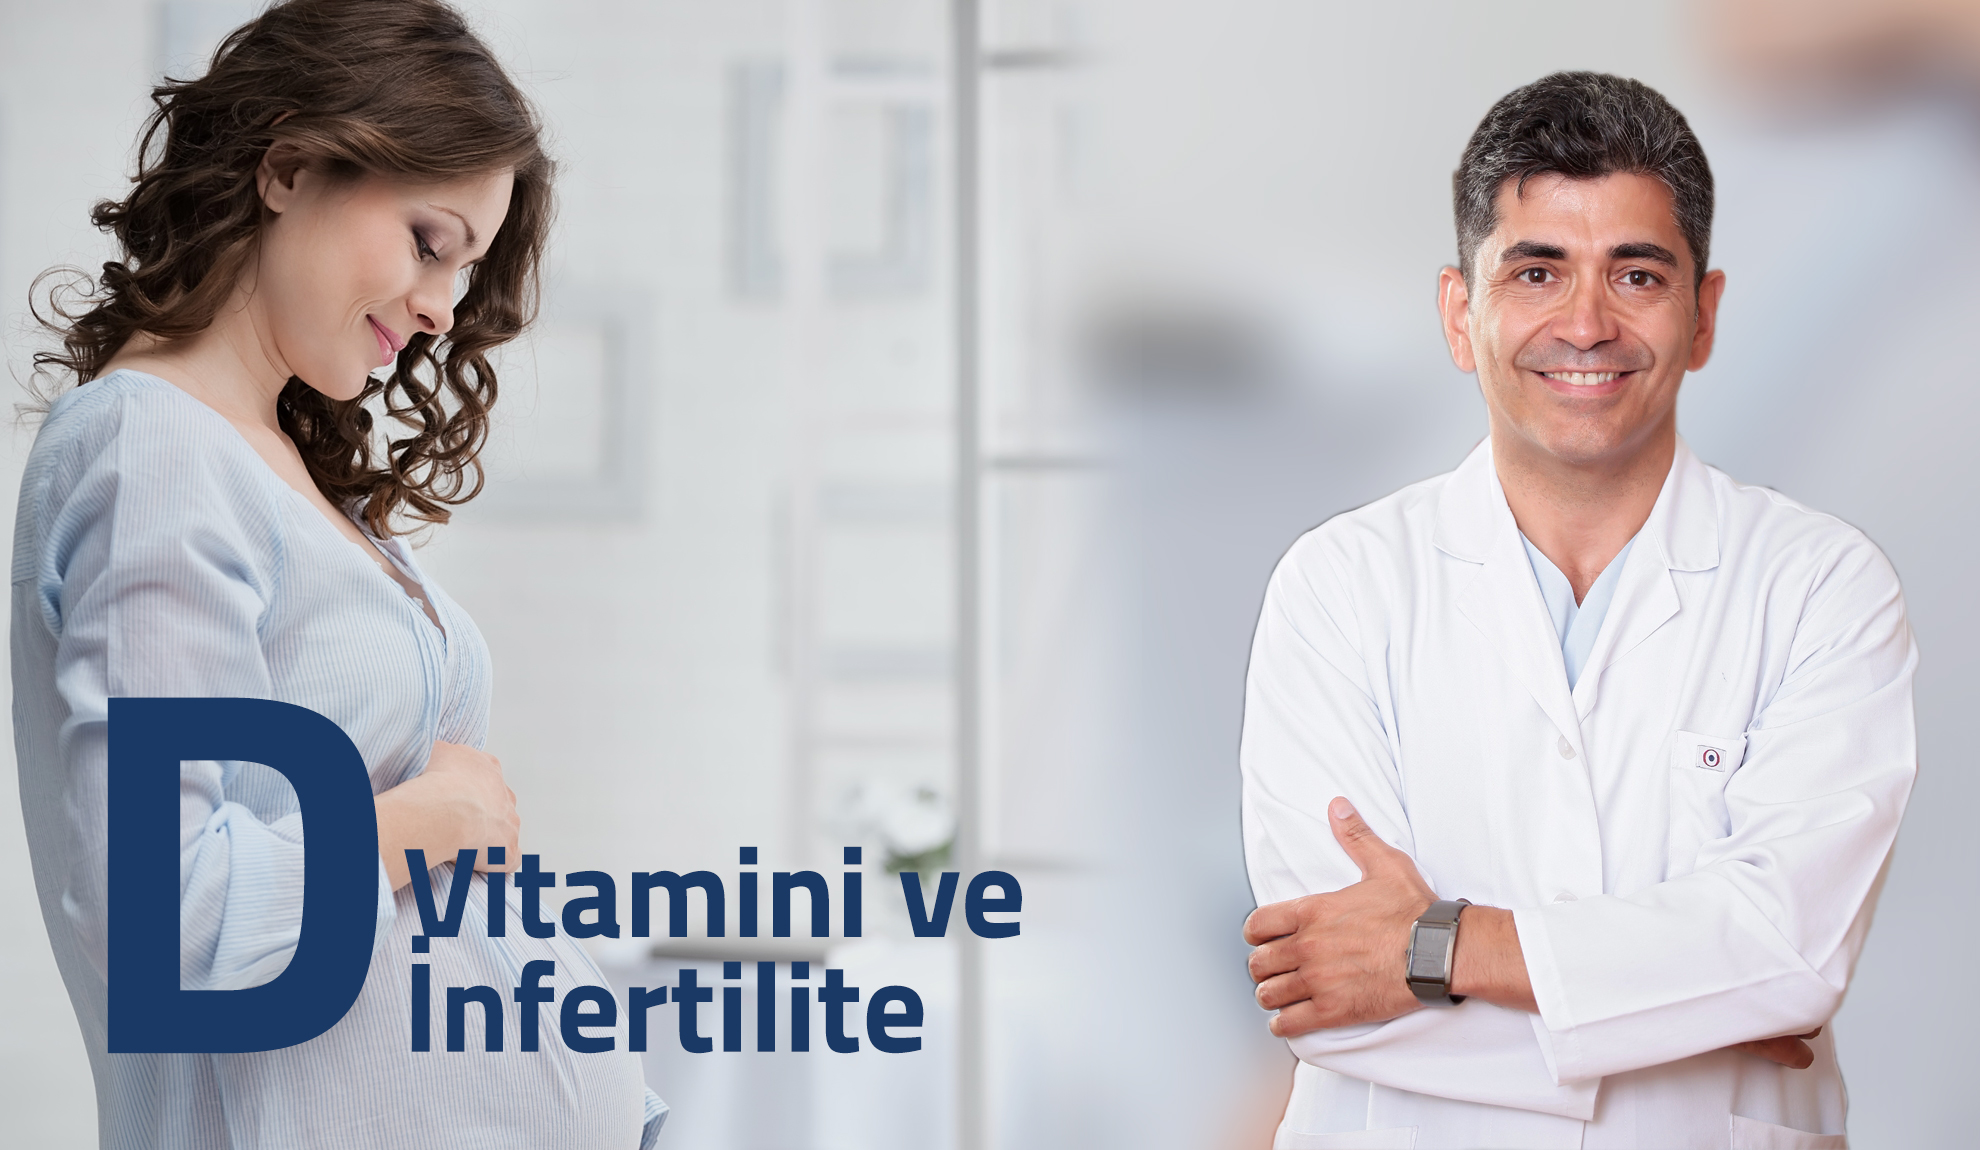 D vitamini ve İnfertilite